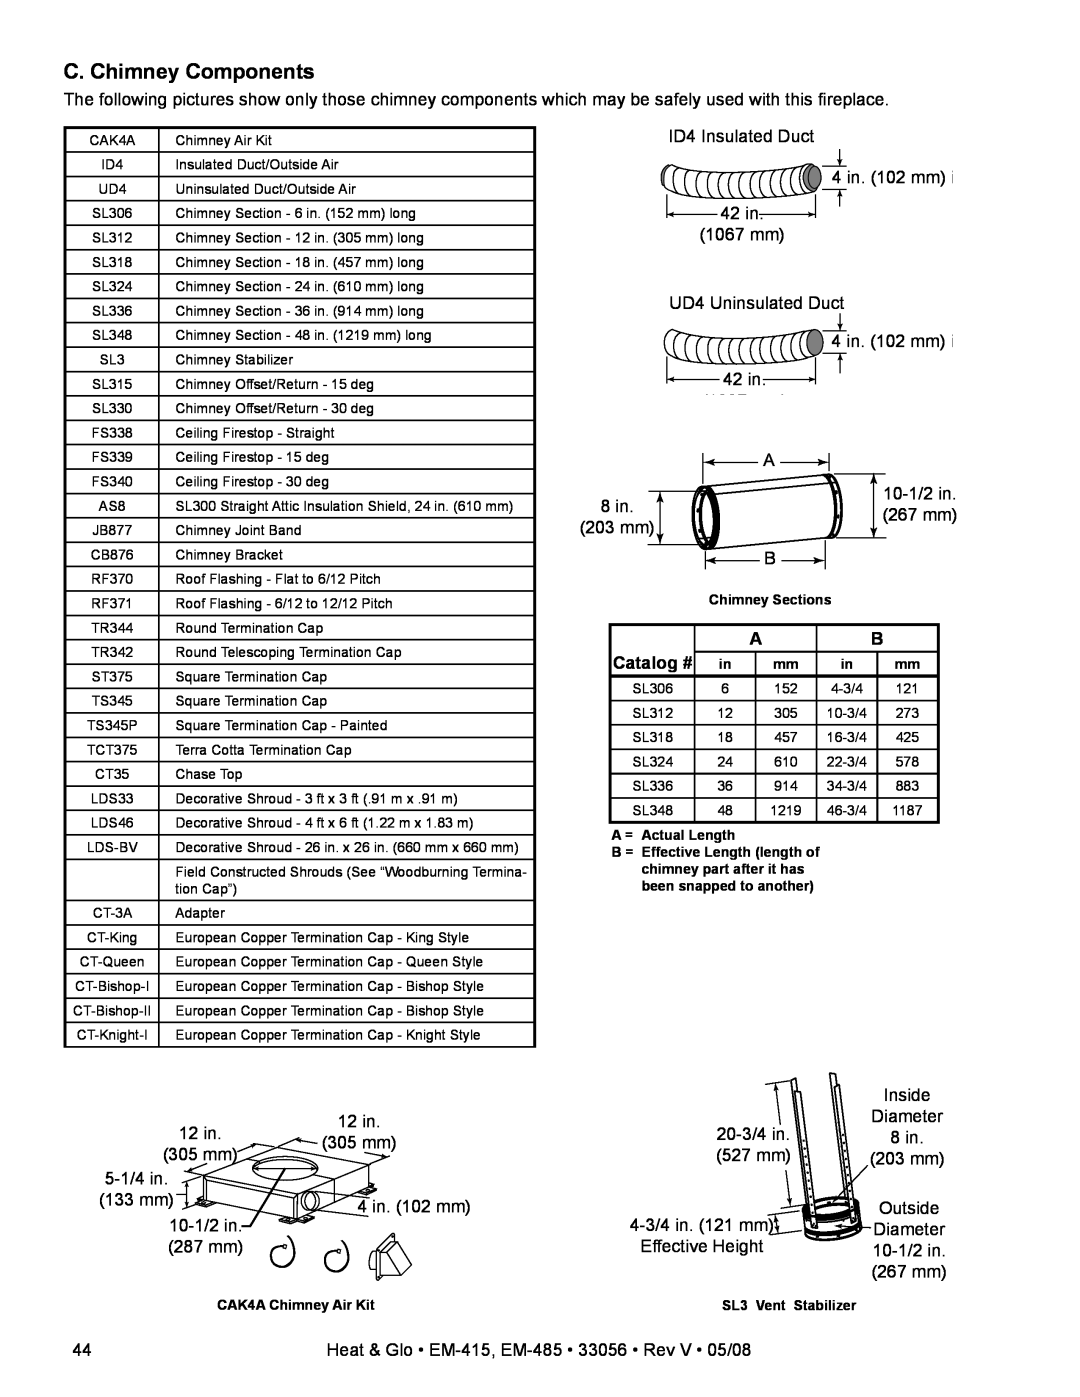 Heat & Glo LifeStyle EM-485TH, EM-415H owner manual C. Chimney Components, Catalog # 